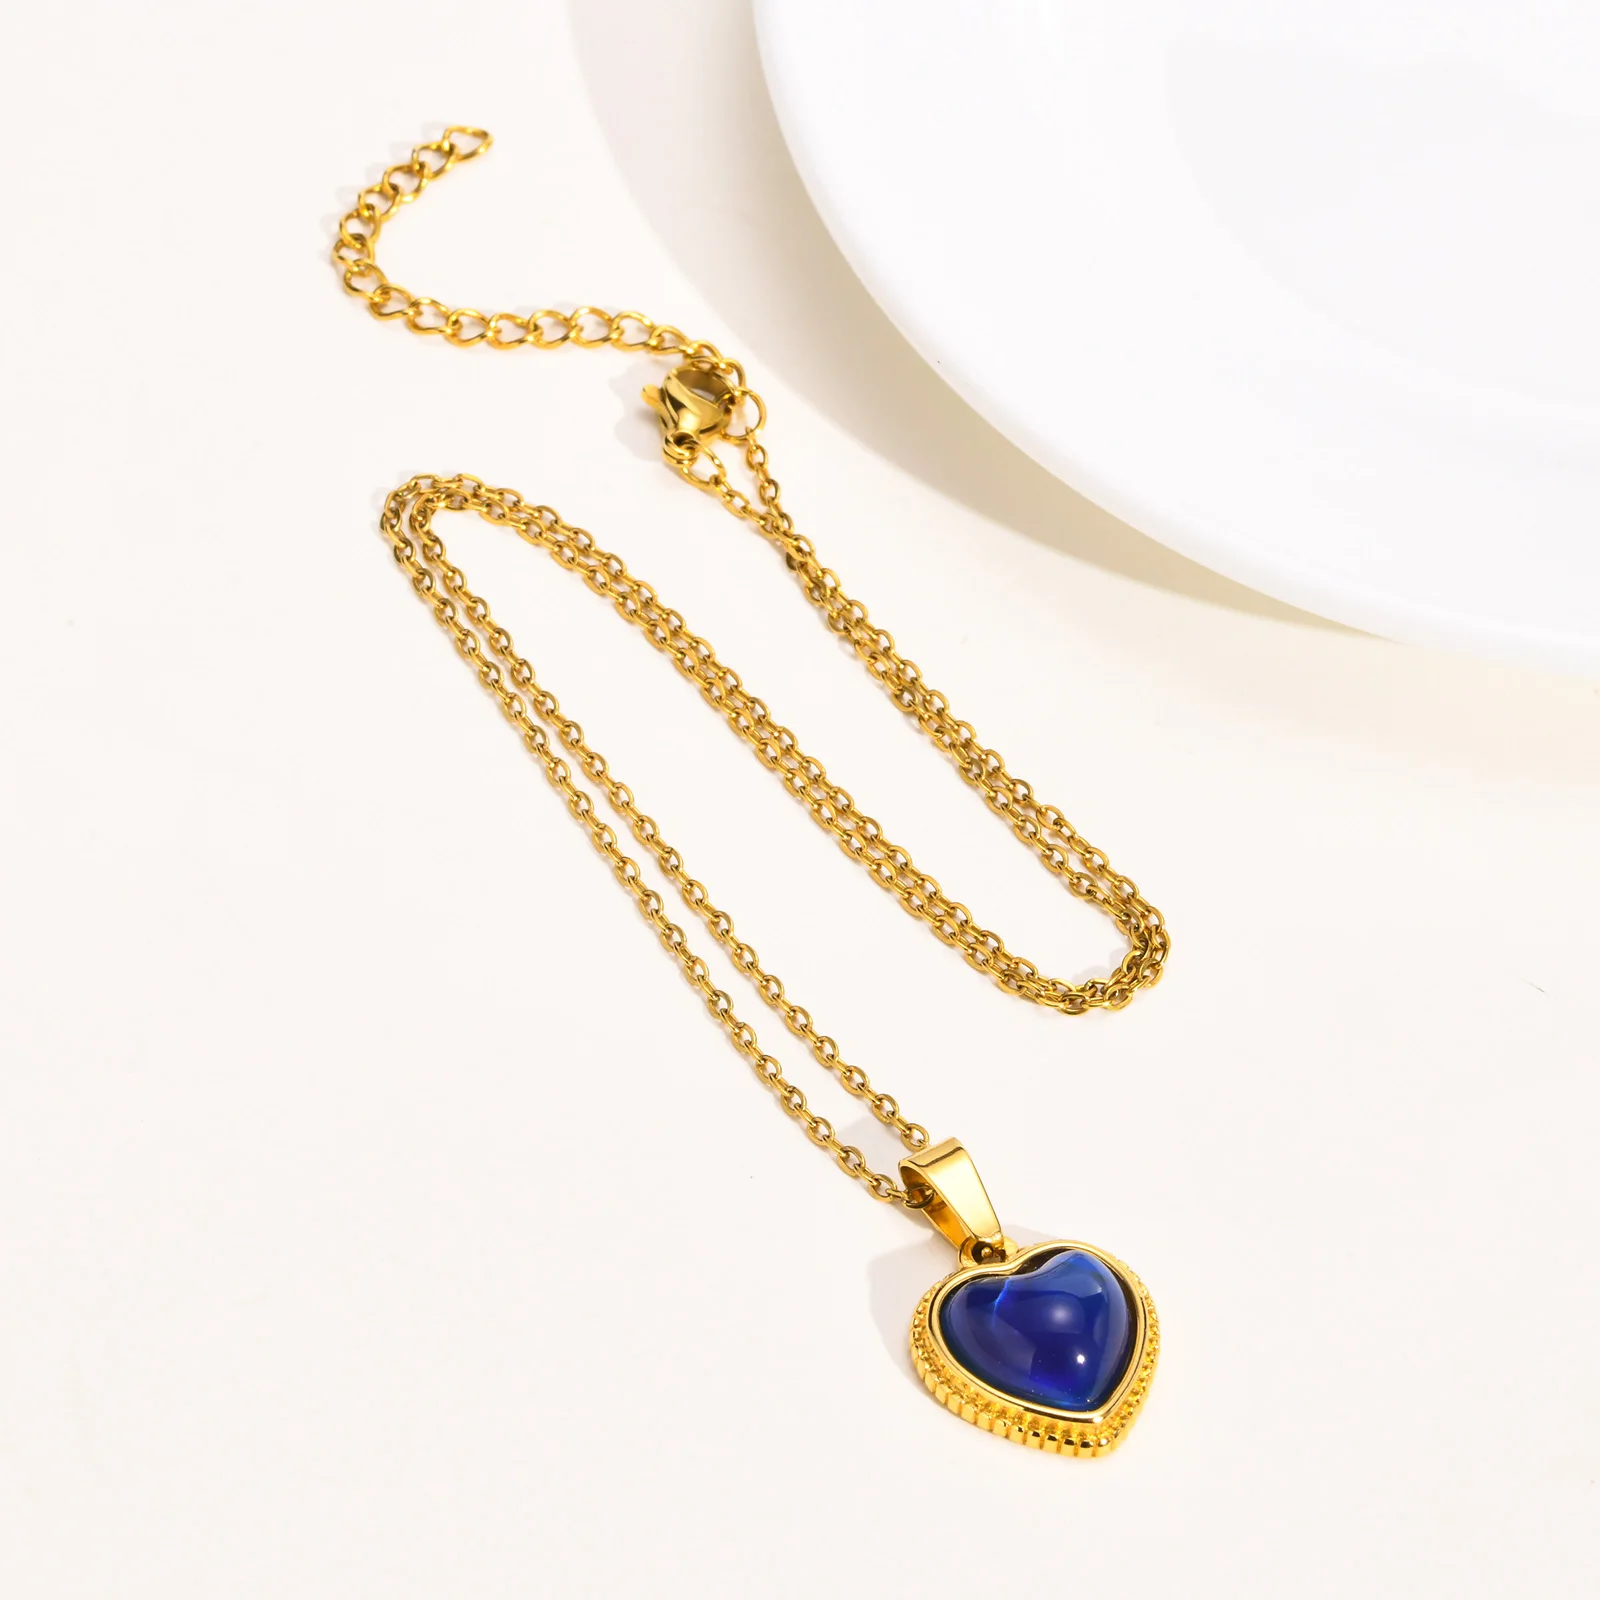 Vintage Style Mood Stone Charm Necklace | Lisa Angel